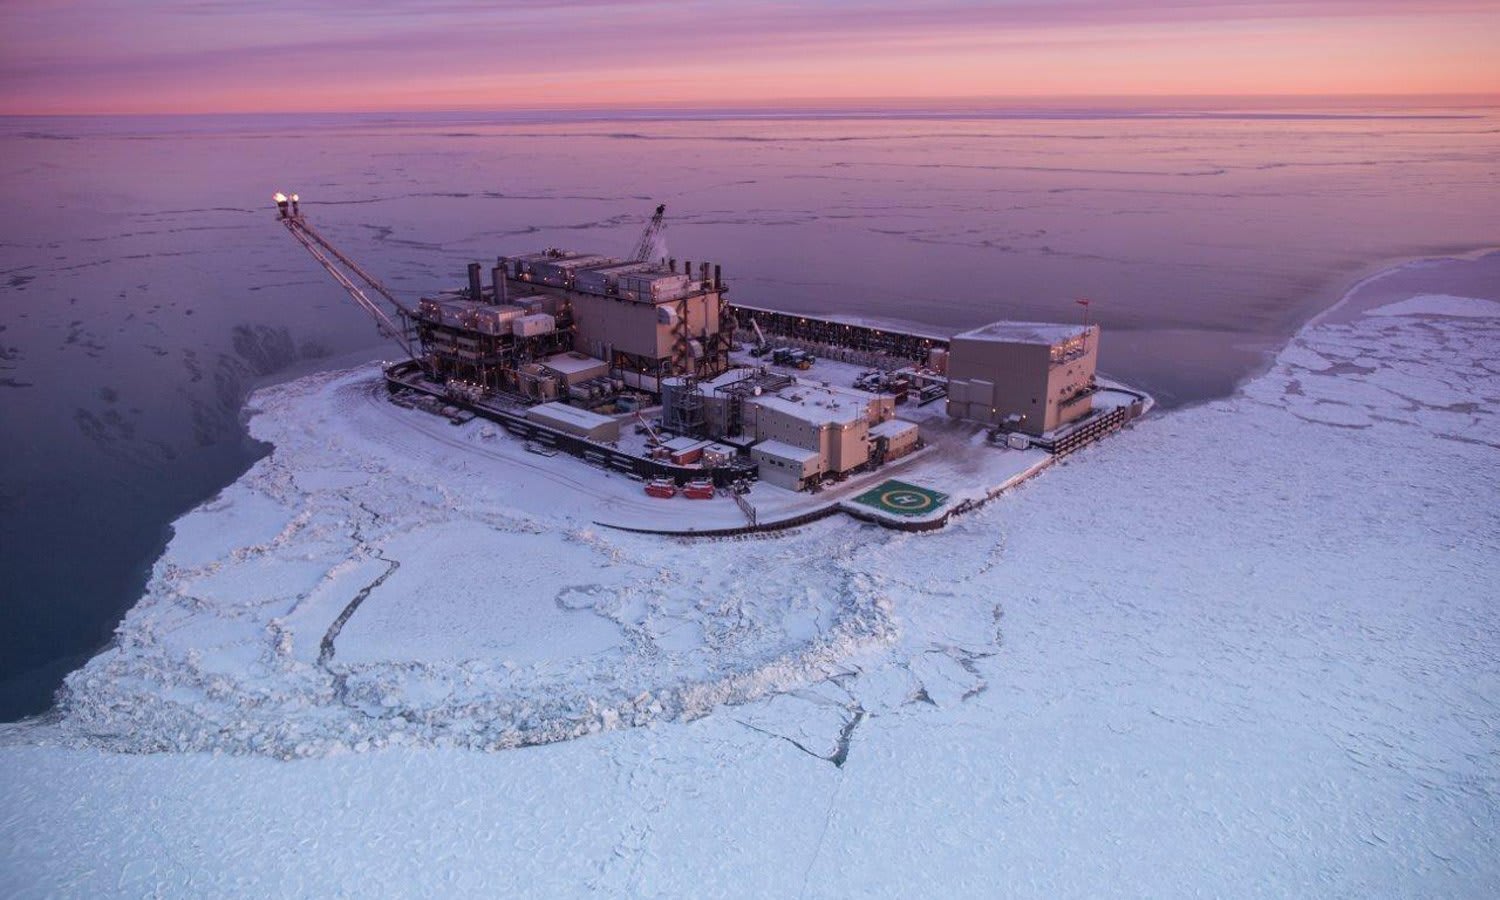 Undercutting Climate Goals, Biden Administration Greenlights Oil Drilling in Alaska